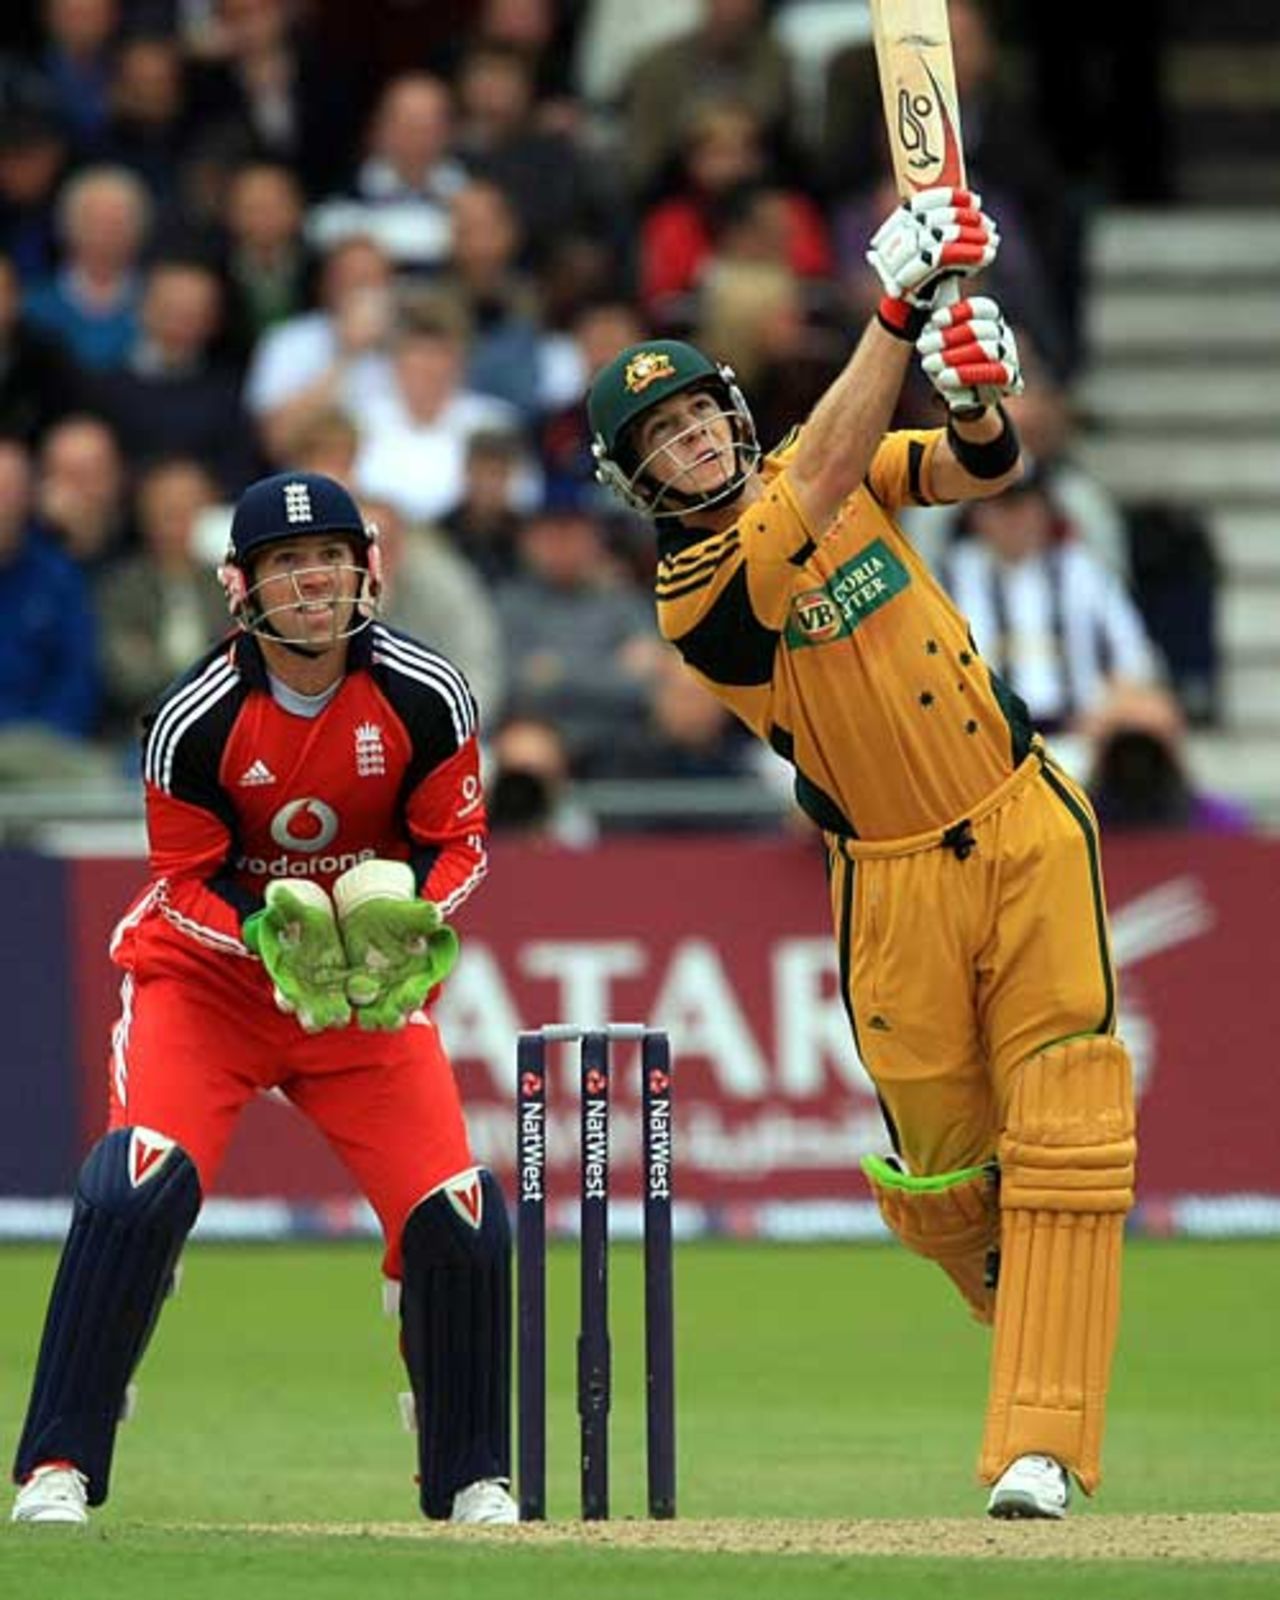 Tim Paine launches down the ground for six, England v Australia, 6th ODI, Trent Bridge, September 17, 2009